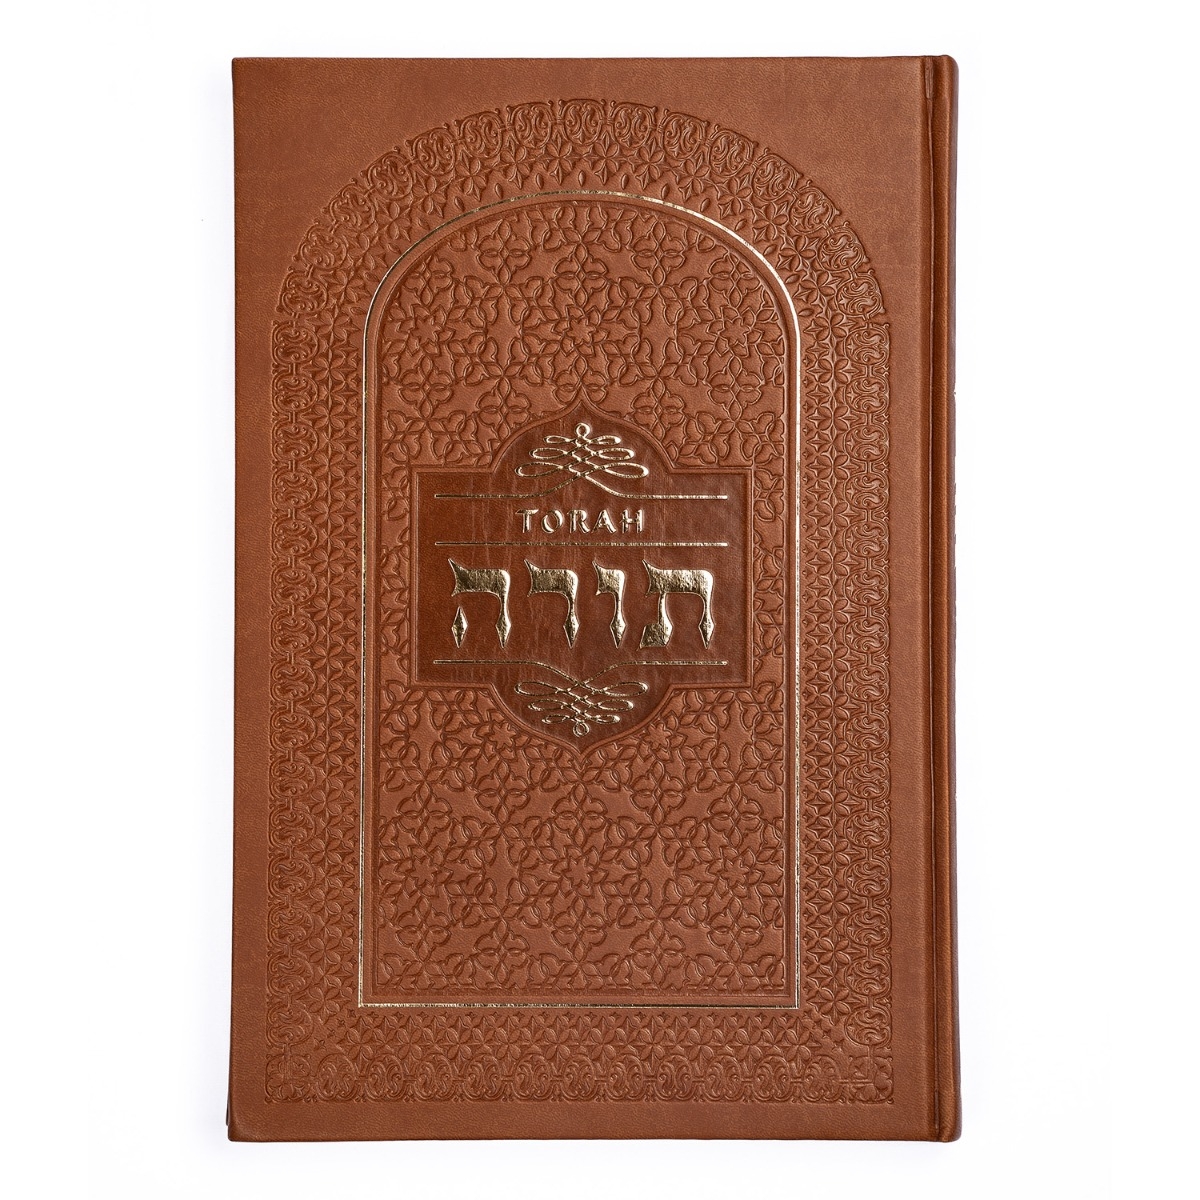 Deluxe Hardcover Illuminated Hebrew/English Torah Bible - 1